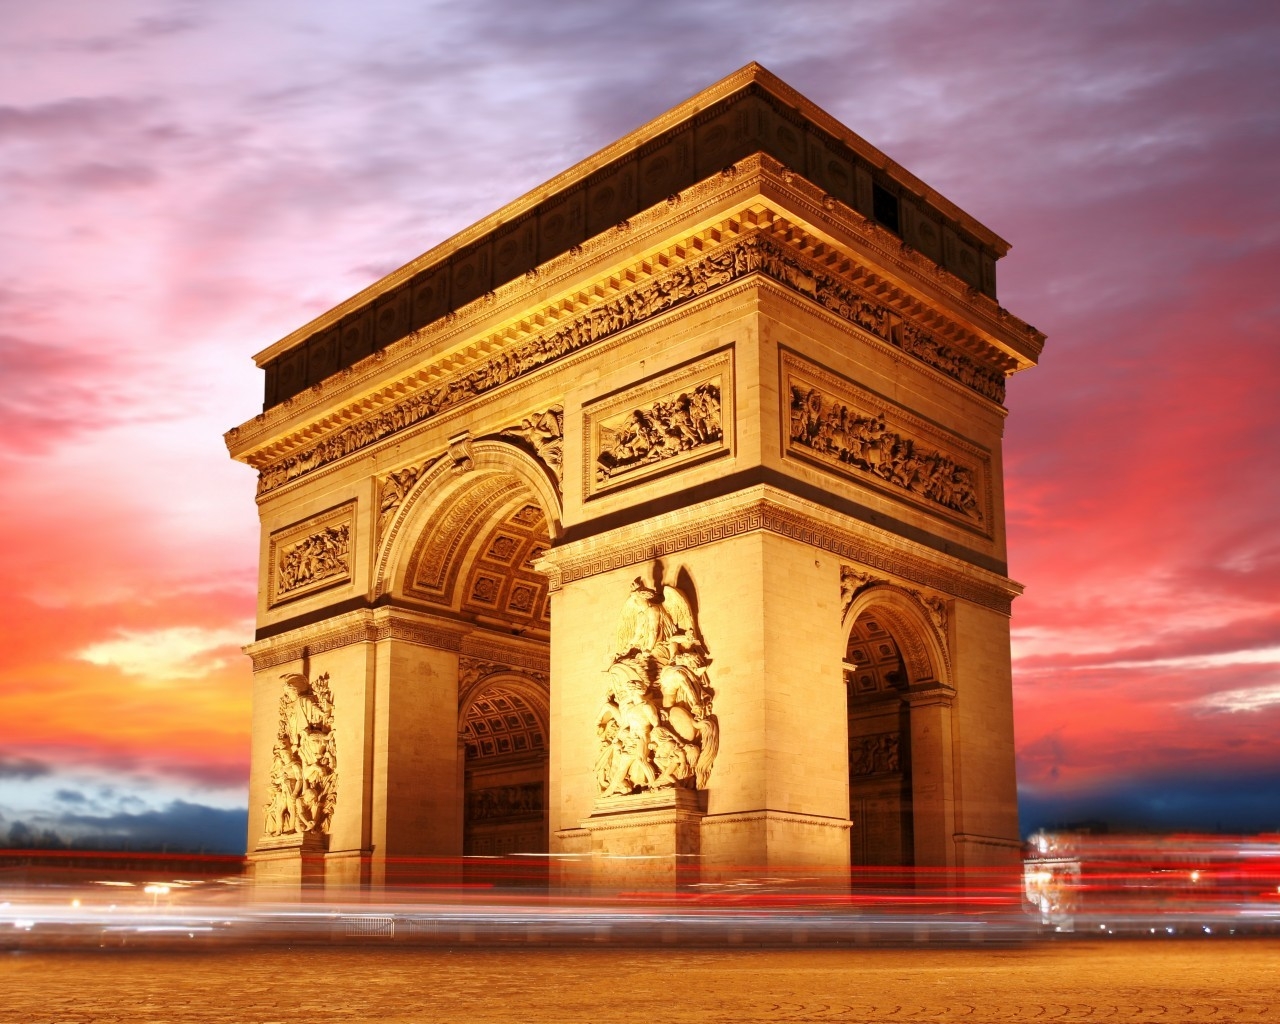 The Arc de Triomphe for 1280 x 1024 resolution